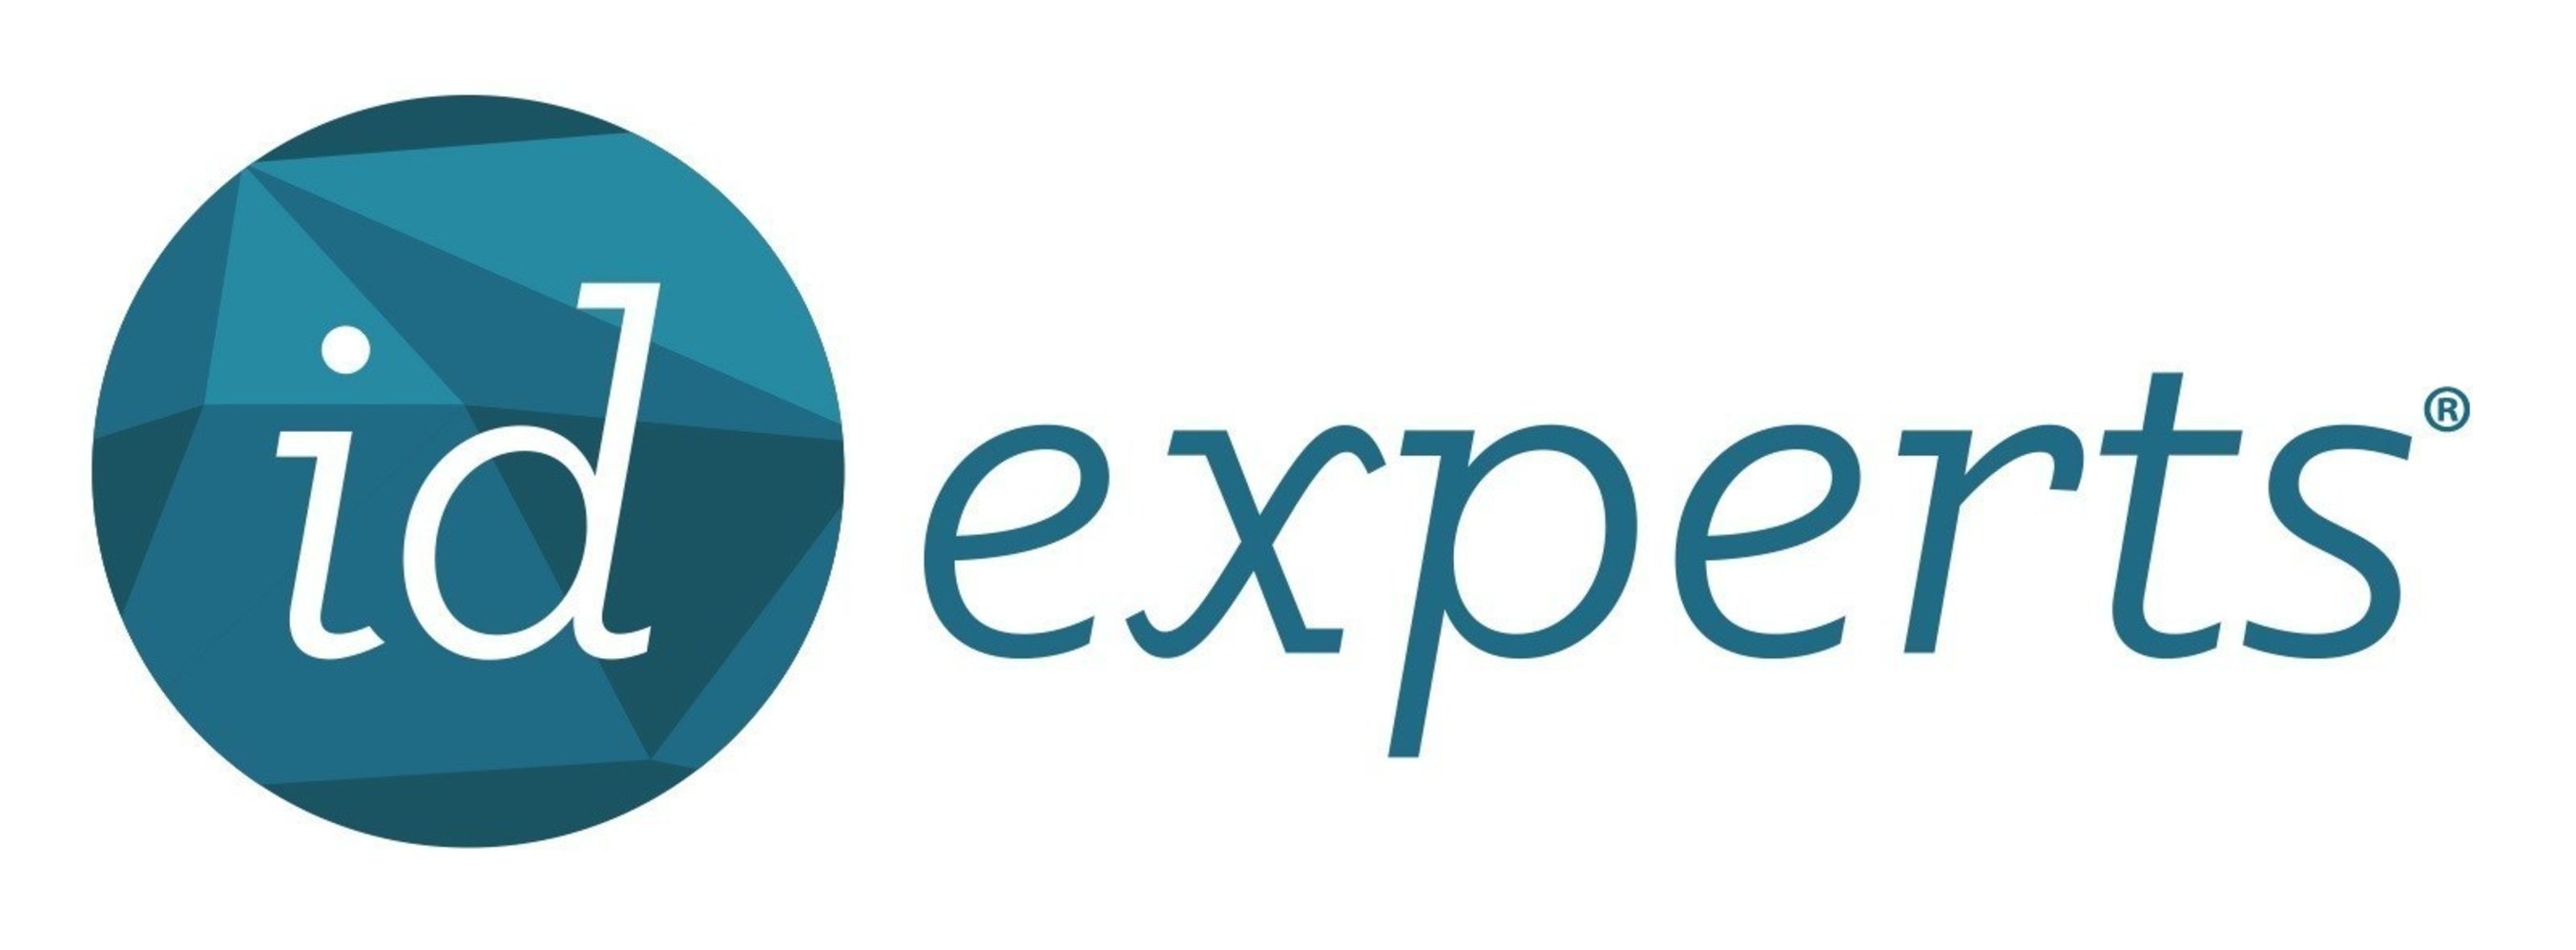 ID Experts Logo.